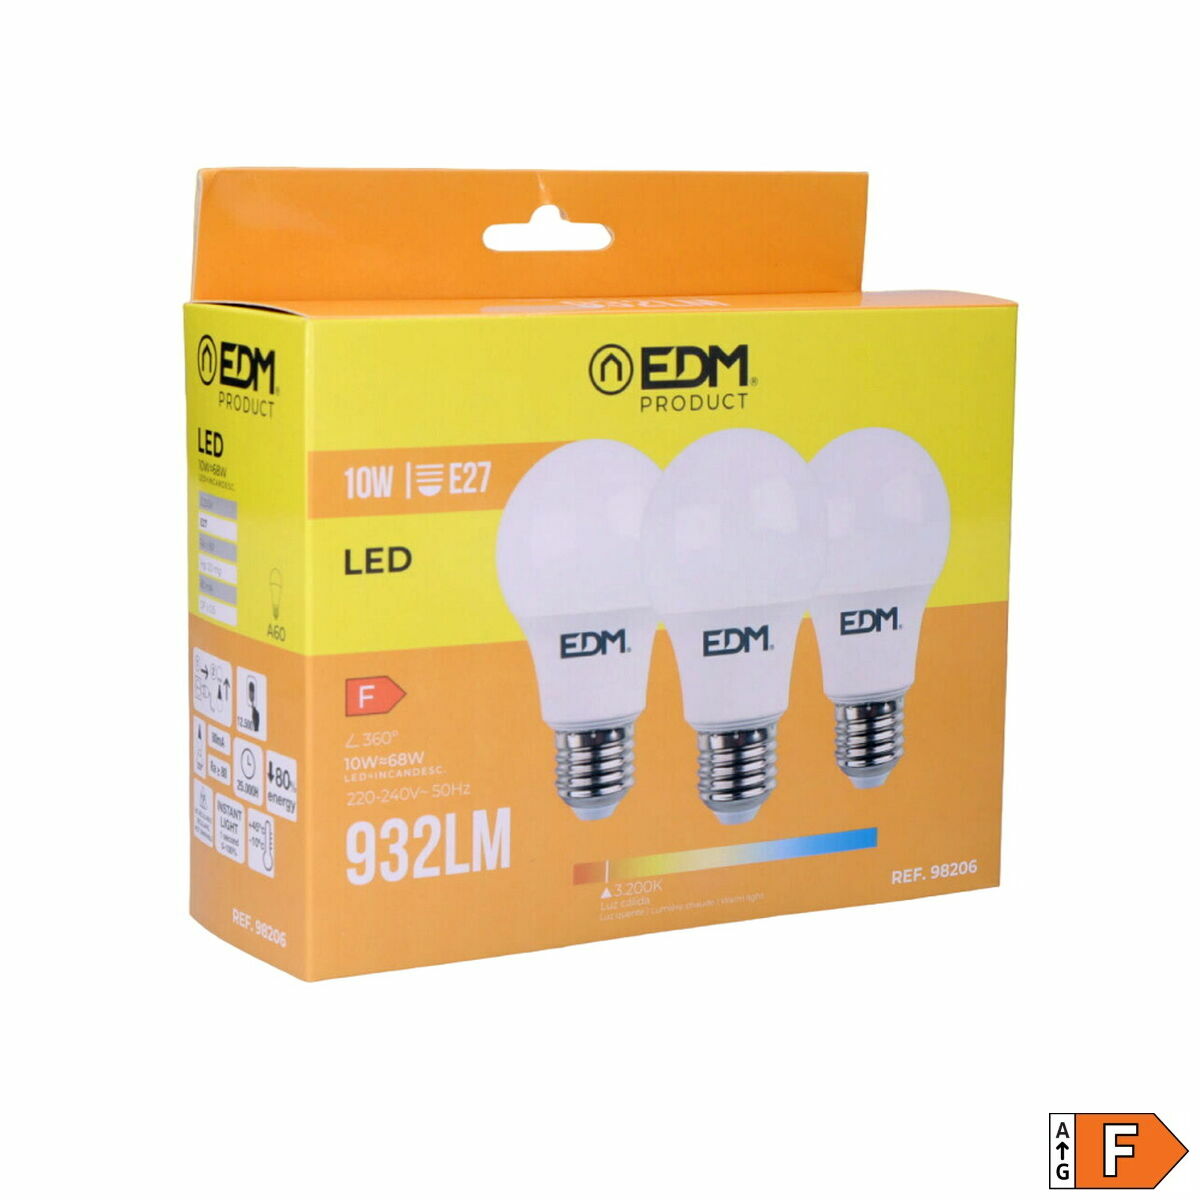 Pack of 3 LED bulbs EDM F 10 W E27 810 Lm Ø 6 x 10,8 cm (3200 K)